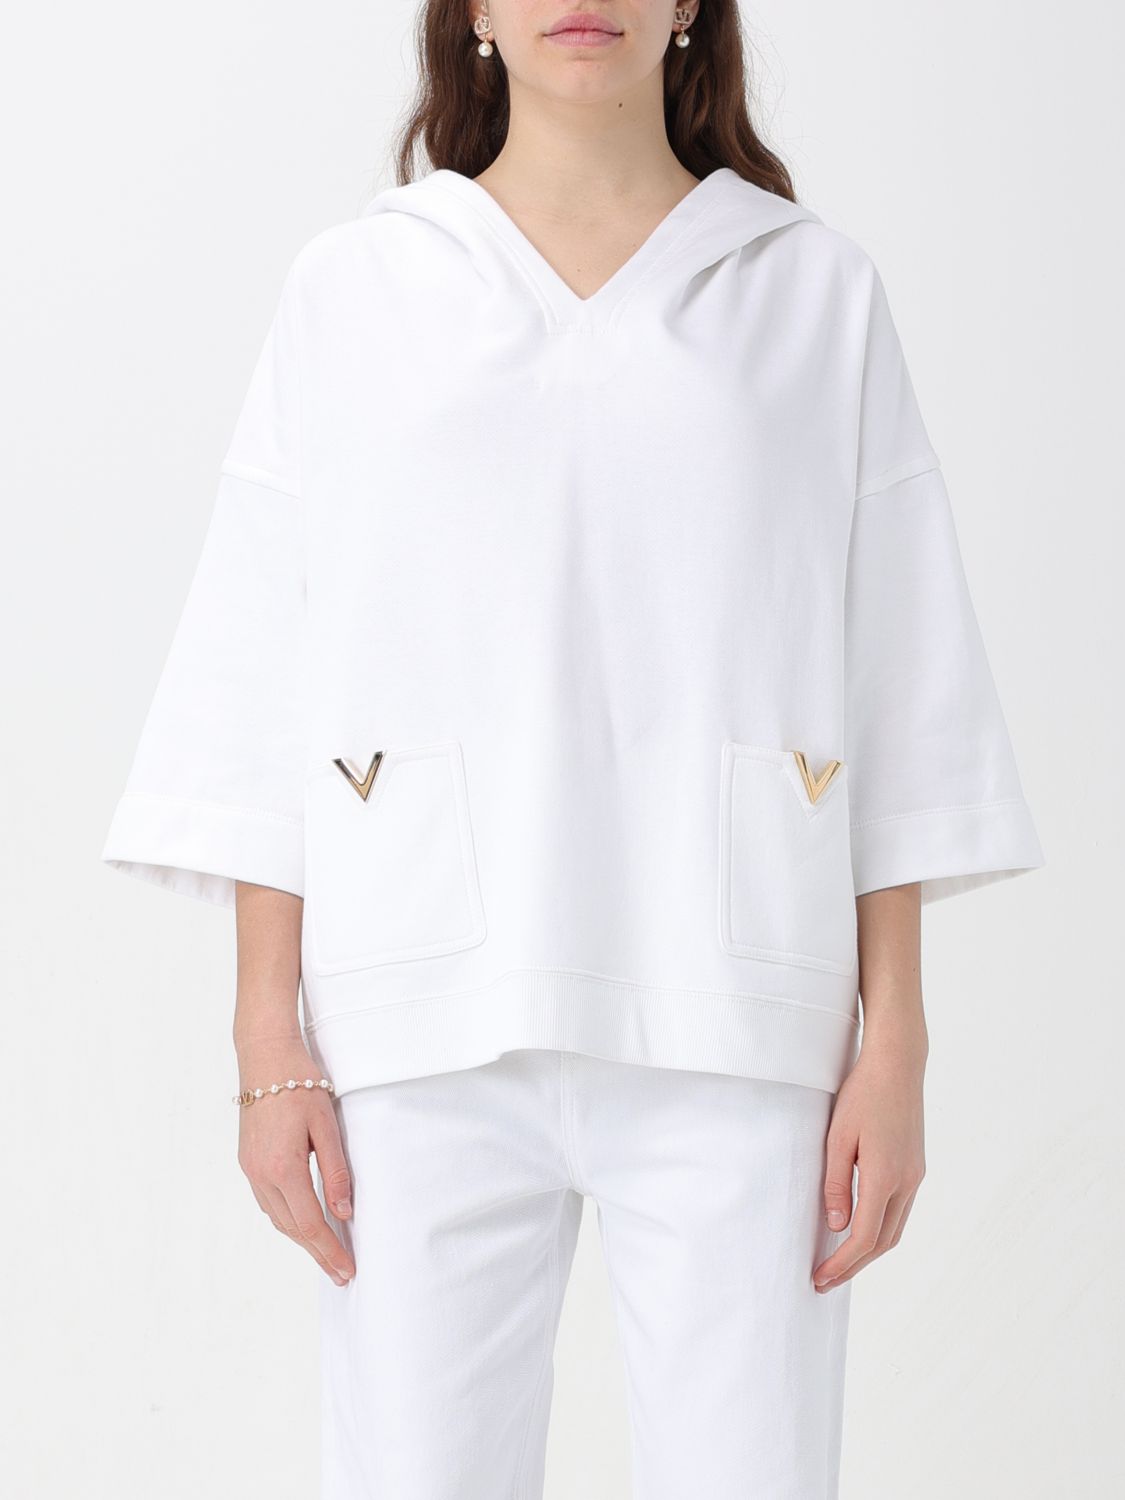 Shop Valentino Sweatshirt  Woman Color White